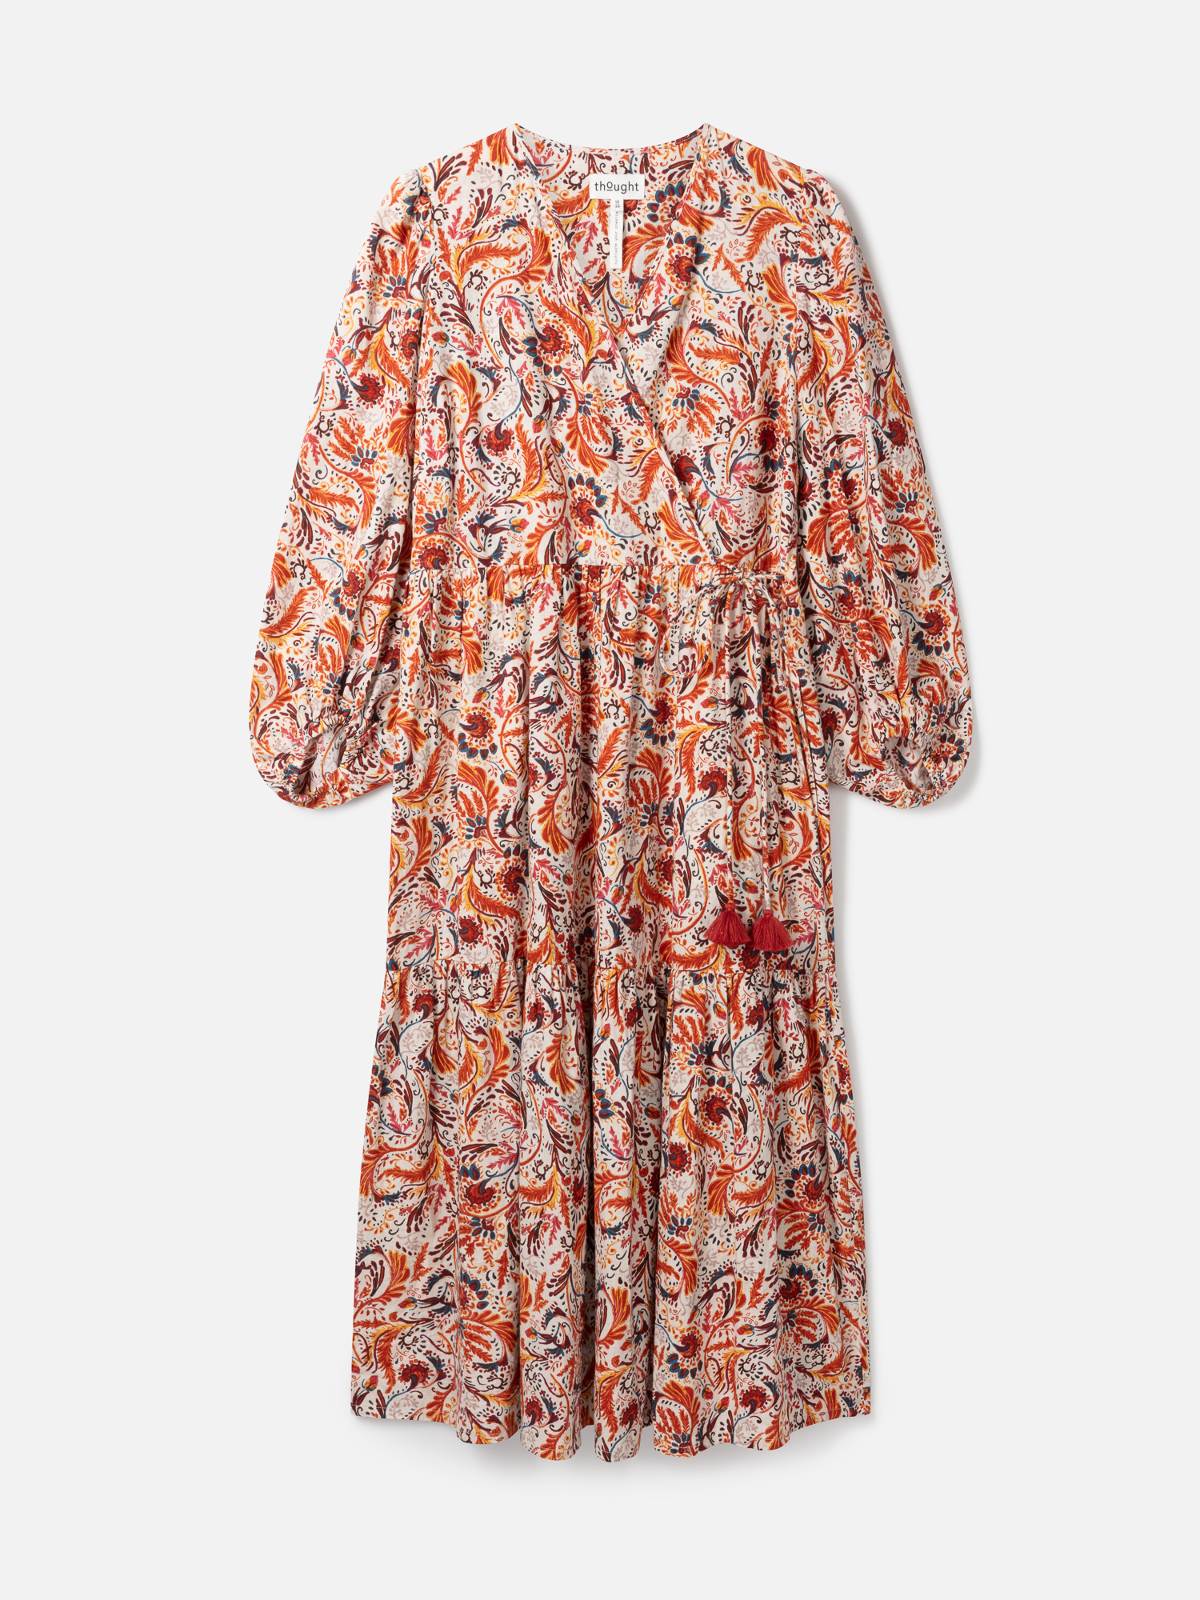 Hemp/Organic Cotton Dress